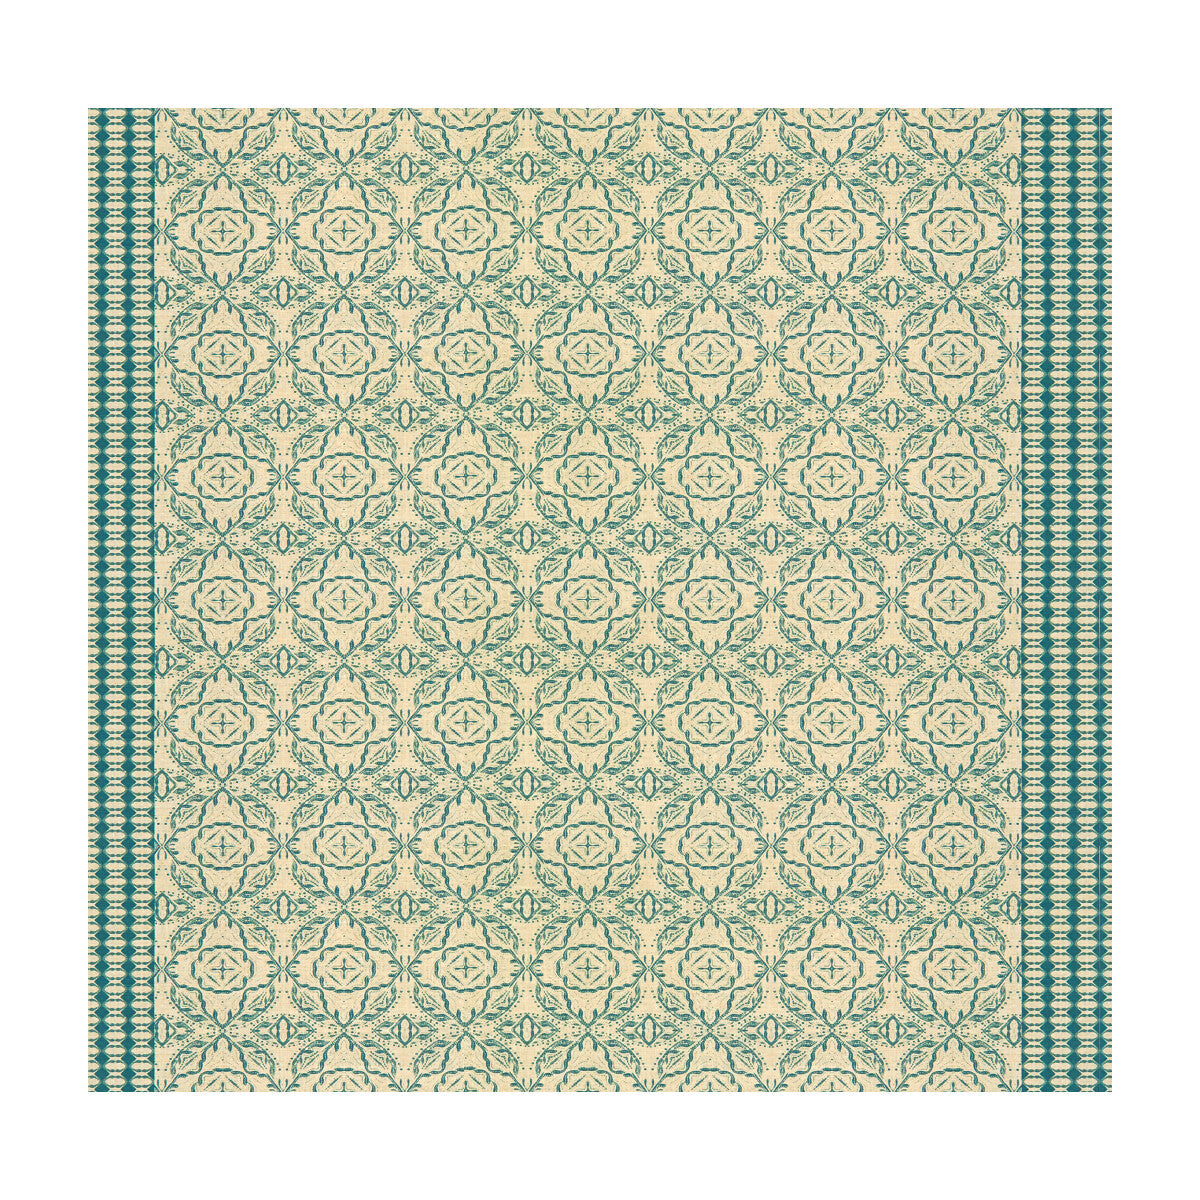 Maze fabric in cornflower color - pattern GWF-3506.5.0 - by Lee Jofa Modern in the Allegra Hicks Garden collection